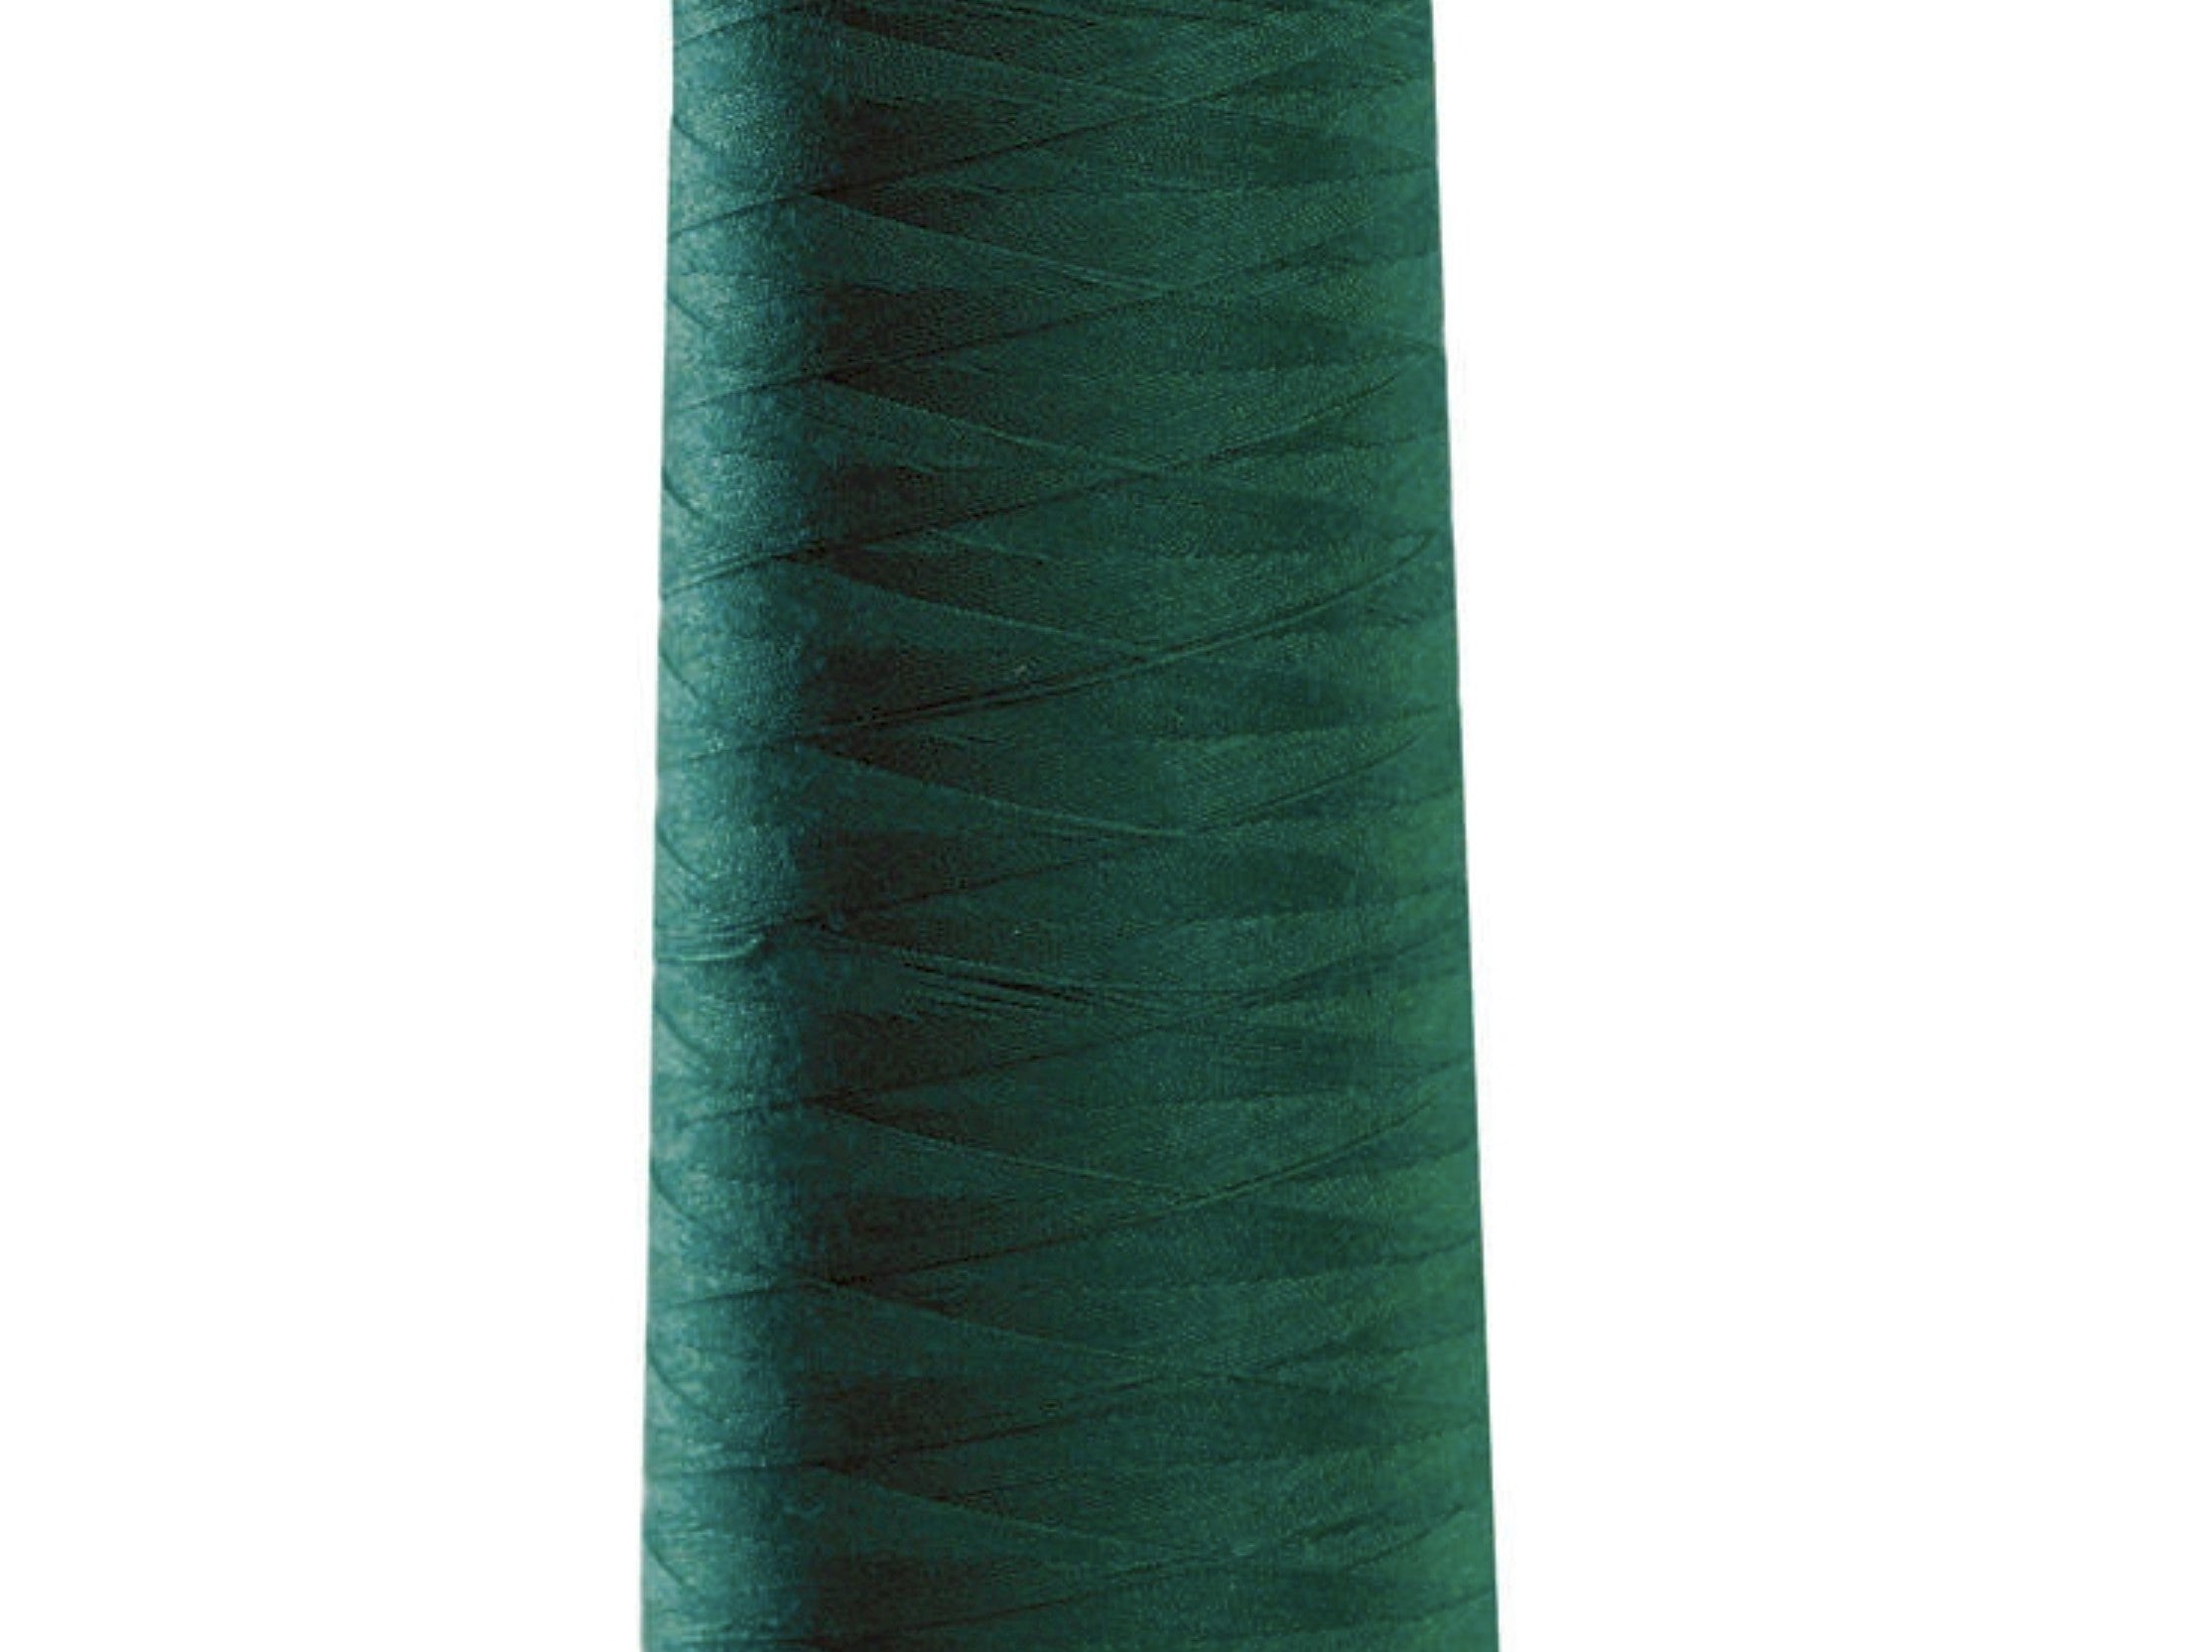 Pine Green Color, Aerolock Premium Serger Thread, Ref. 9902 by Madeira®